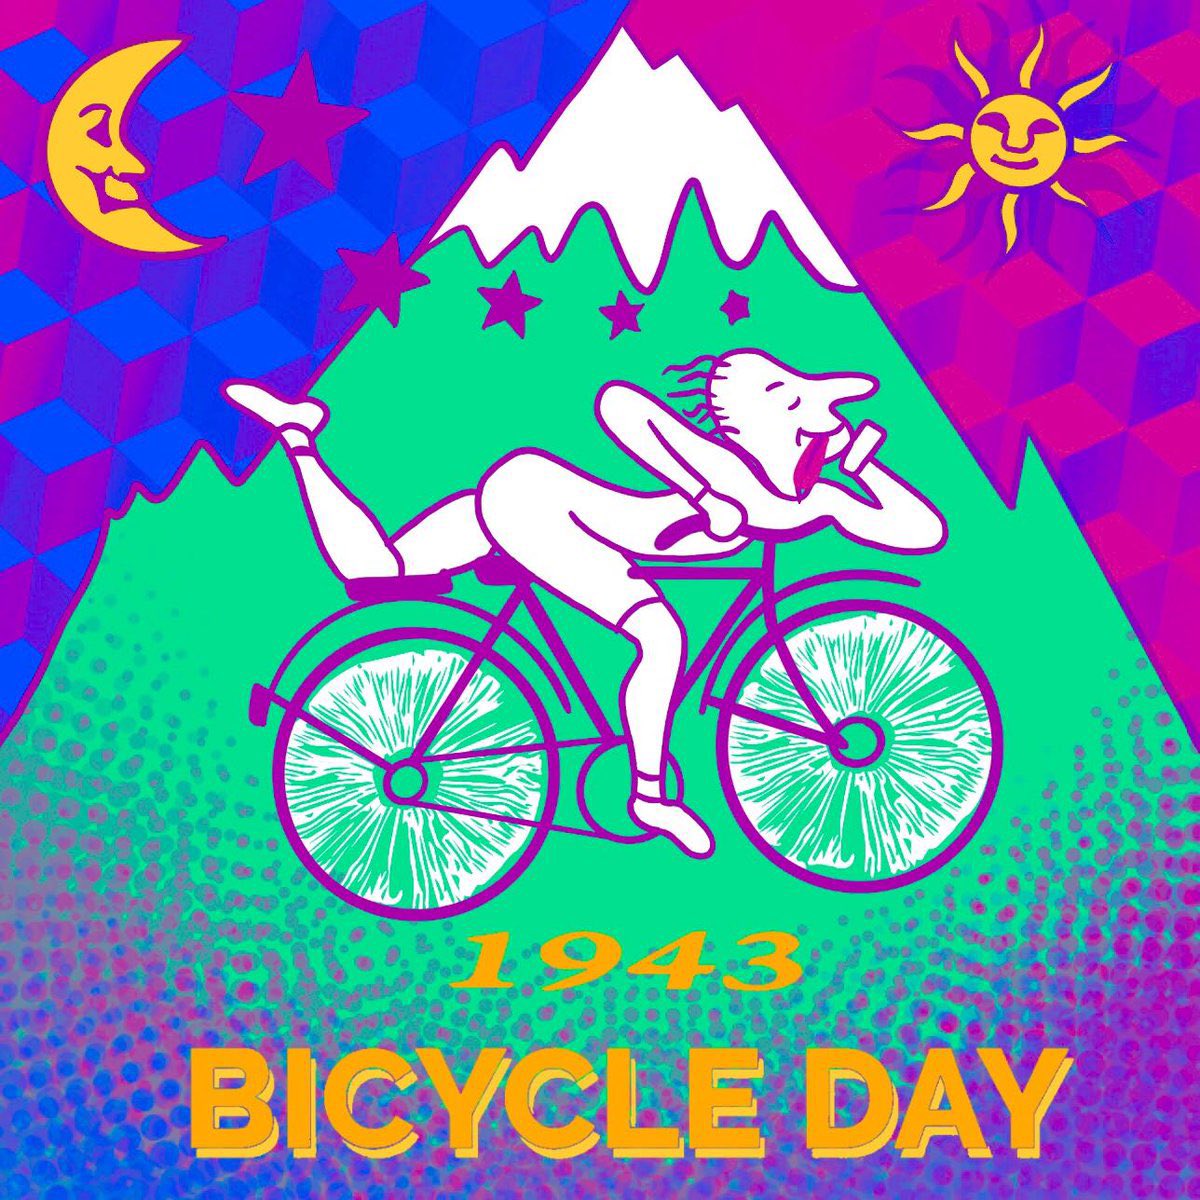 It’s been a long strange trip!
Happy Bicycle Day! 
Ya heathens 
#BicycleDay #bicycleday2024